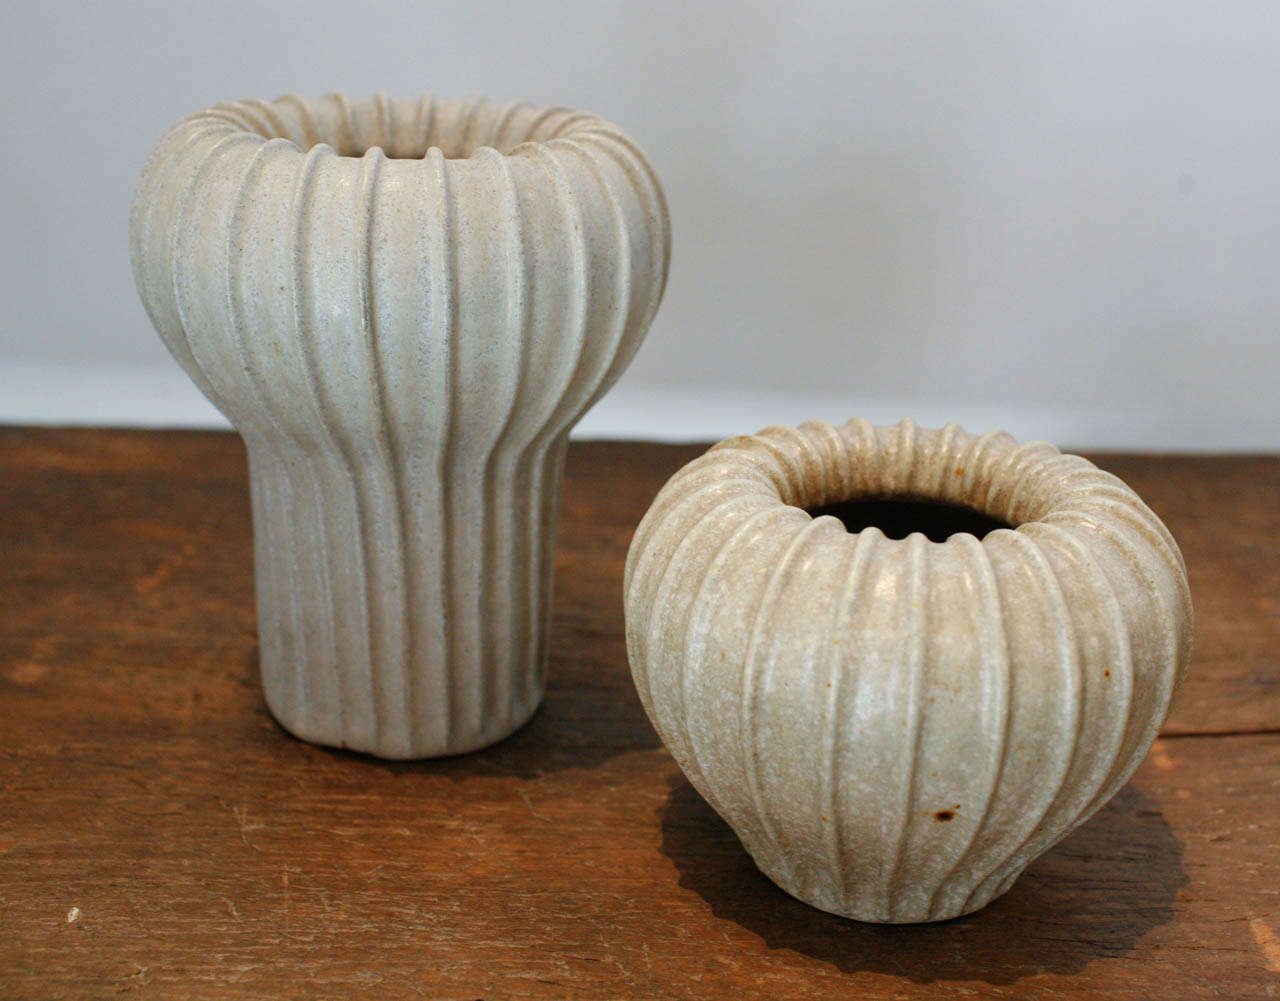 two glazed stoneware vases by scandinavian ceramist , arne bang. artist signature to bottom of both ceramics. sold individually.

dimensions 

left :   ht 6.75 diameter 6
right:  ht 4.25 diameter 5.5